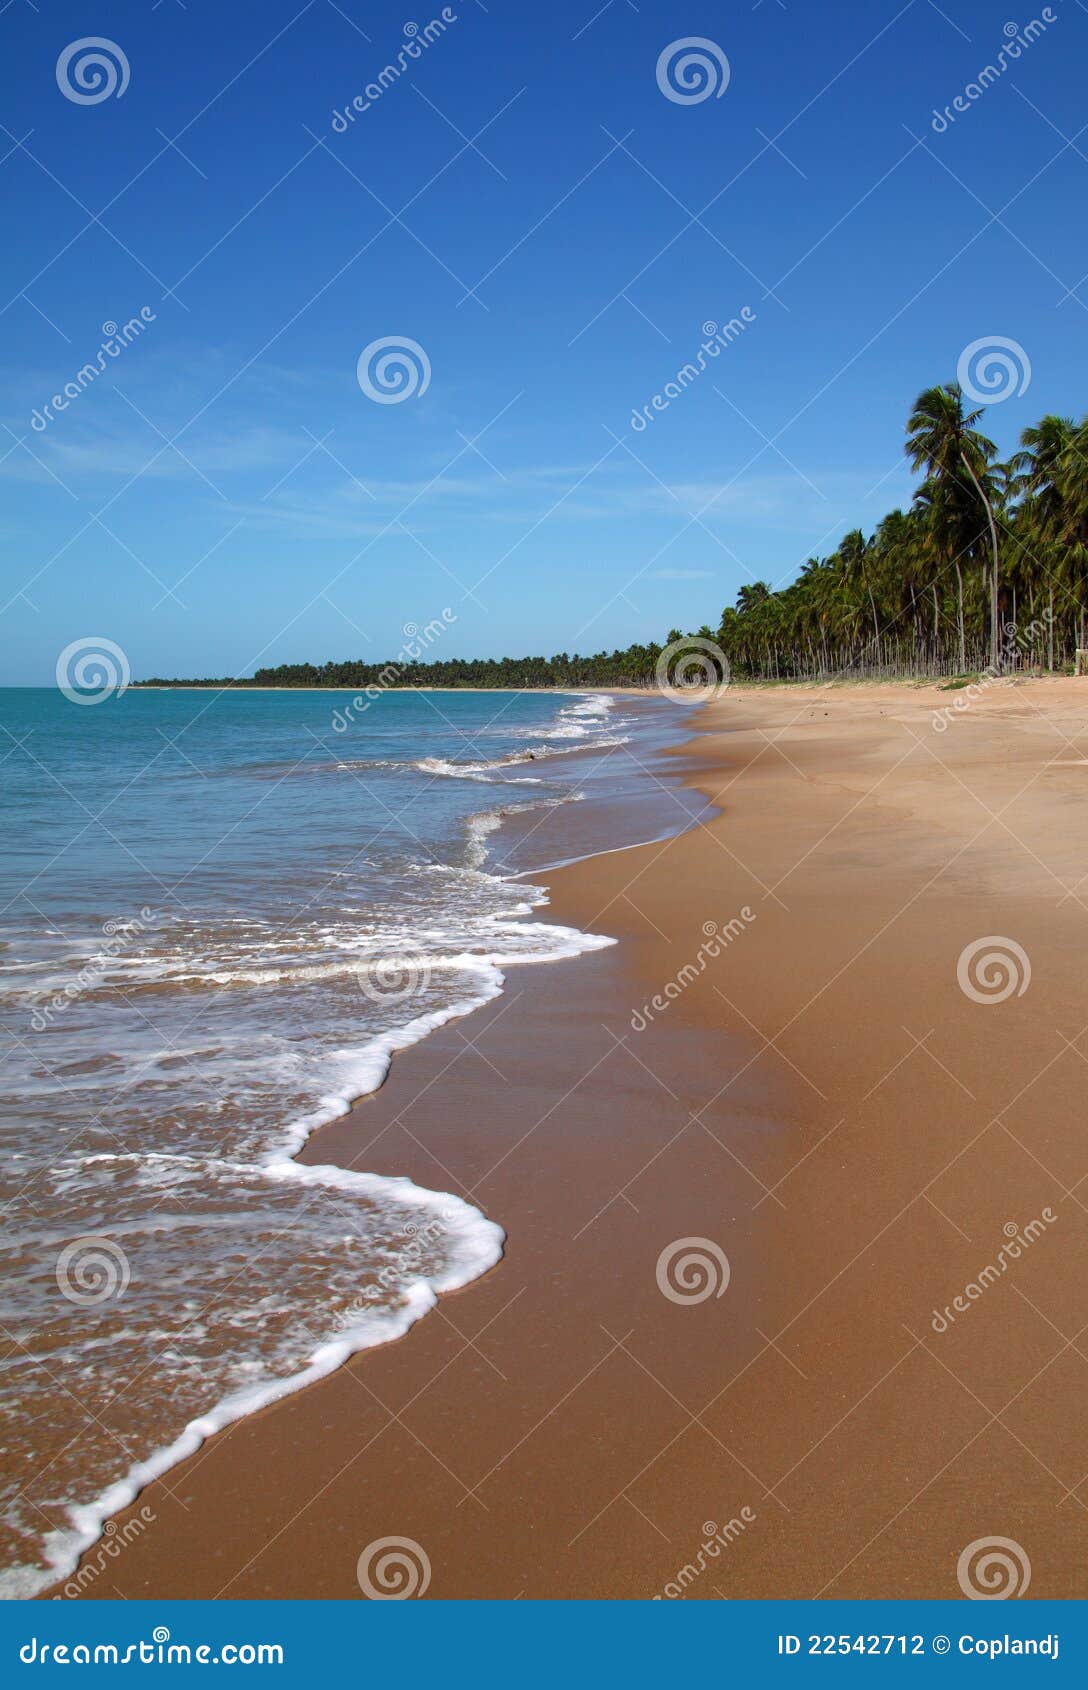 brazil alagoas maceio deserted palm lined beach